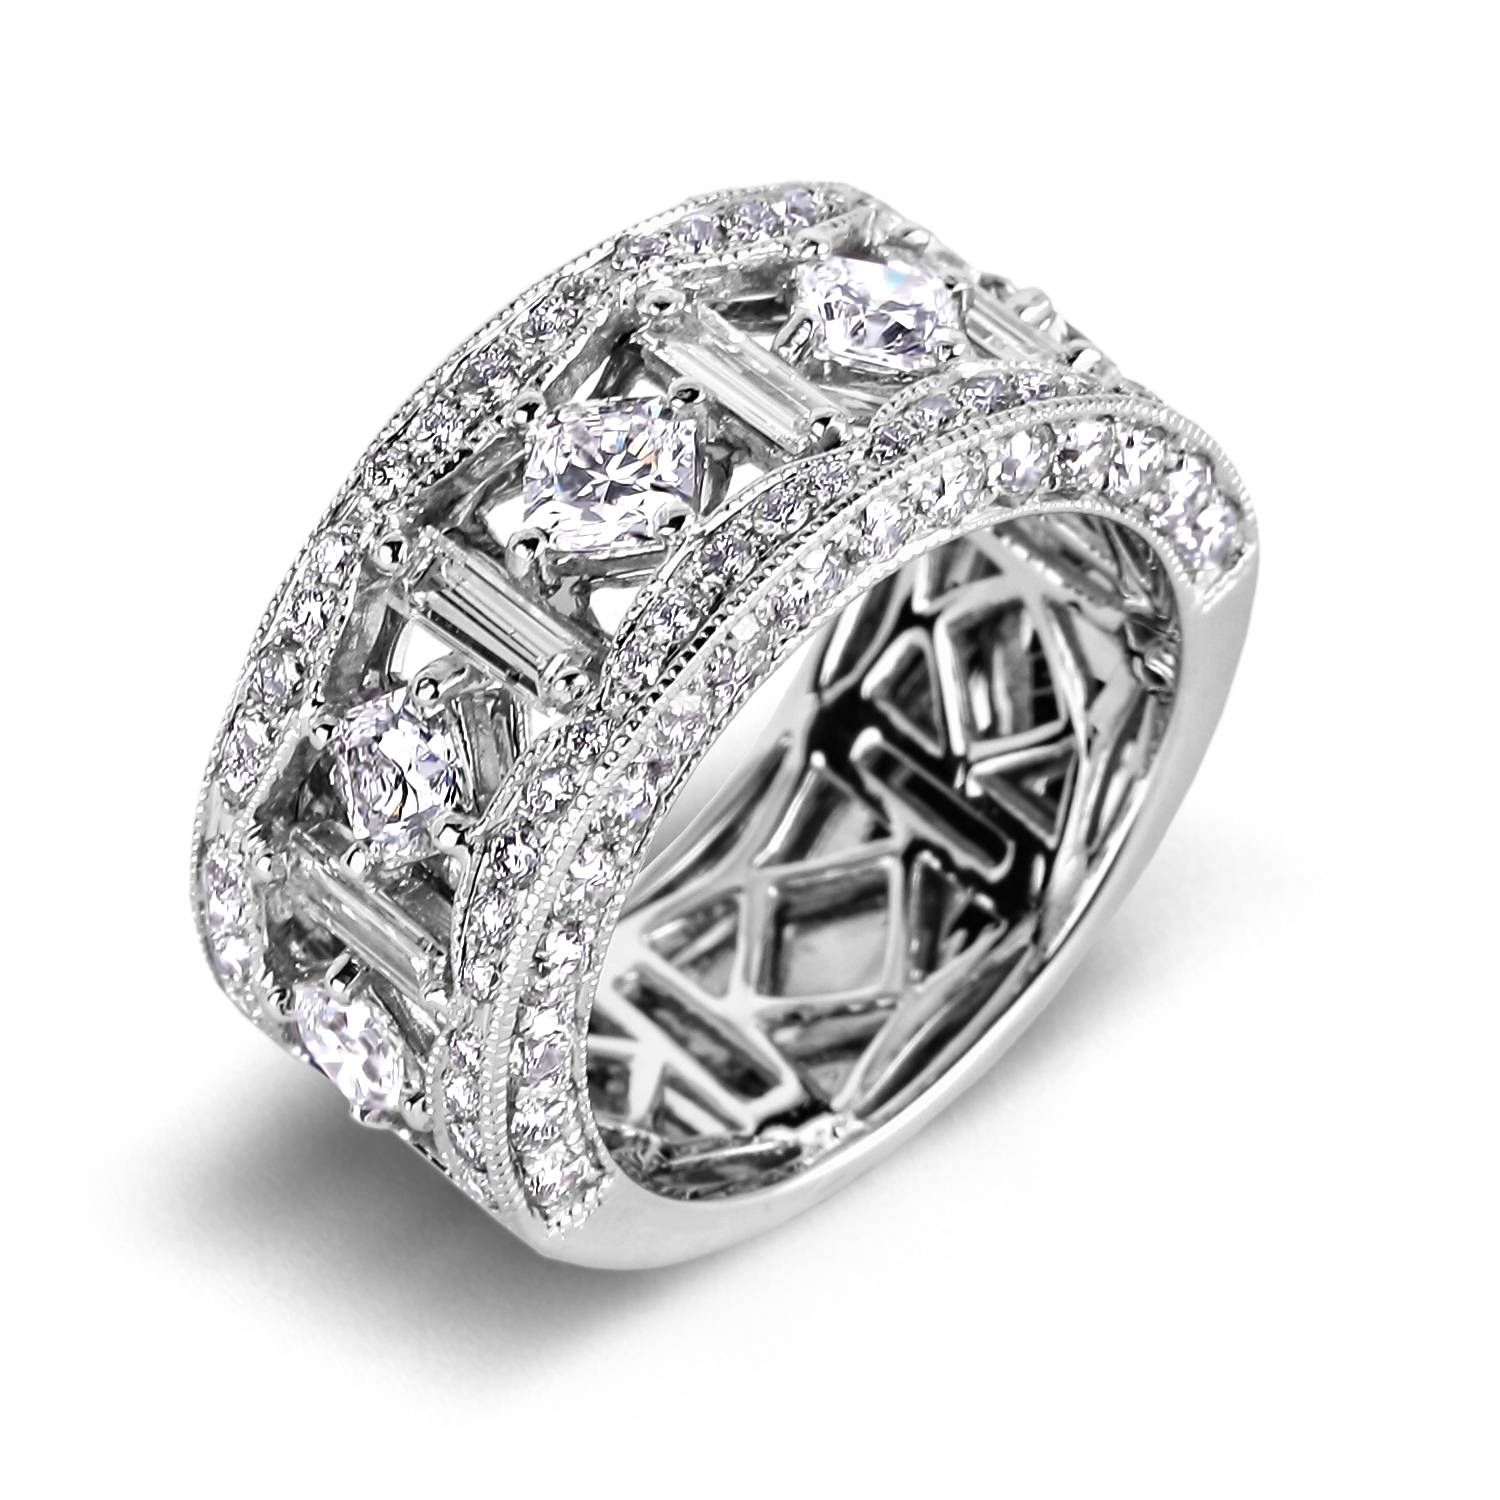 Wedding Anniversary Rings Diamonds | Wedding Ideas Inside Current Vintage Anniversary Rings (View 11 of 25)